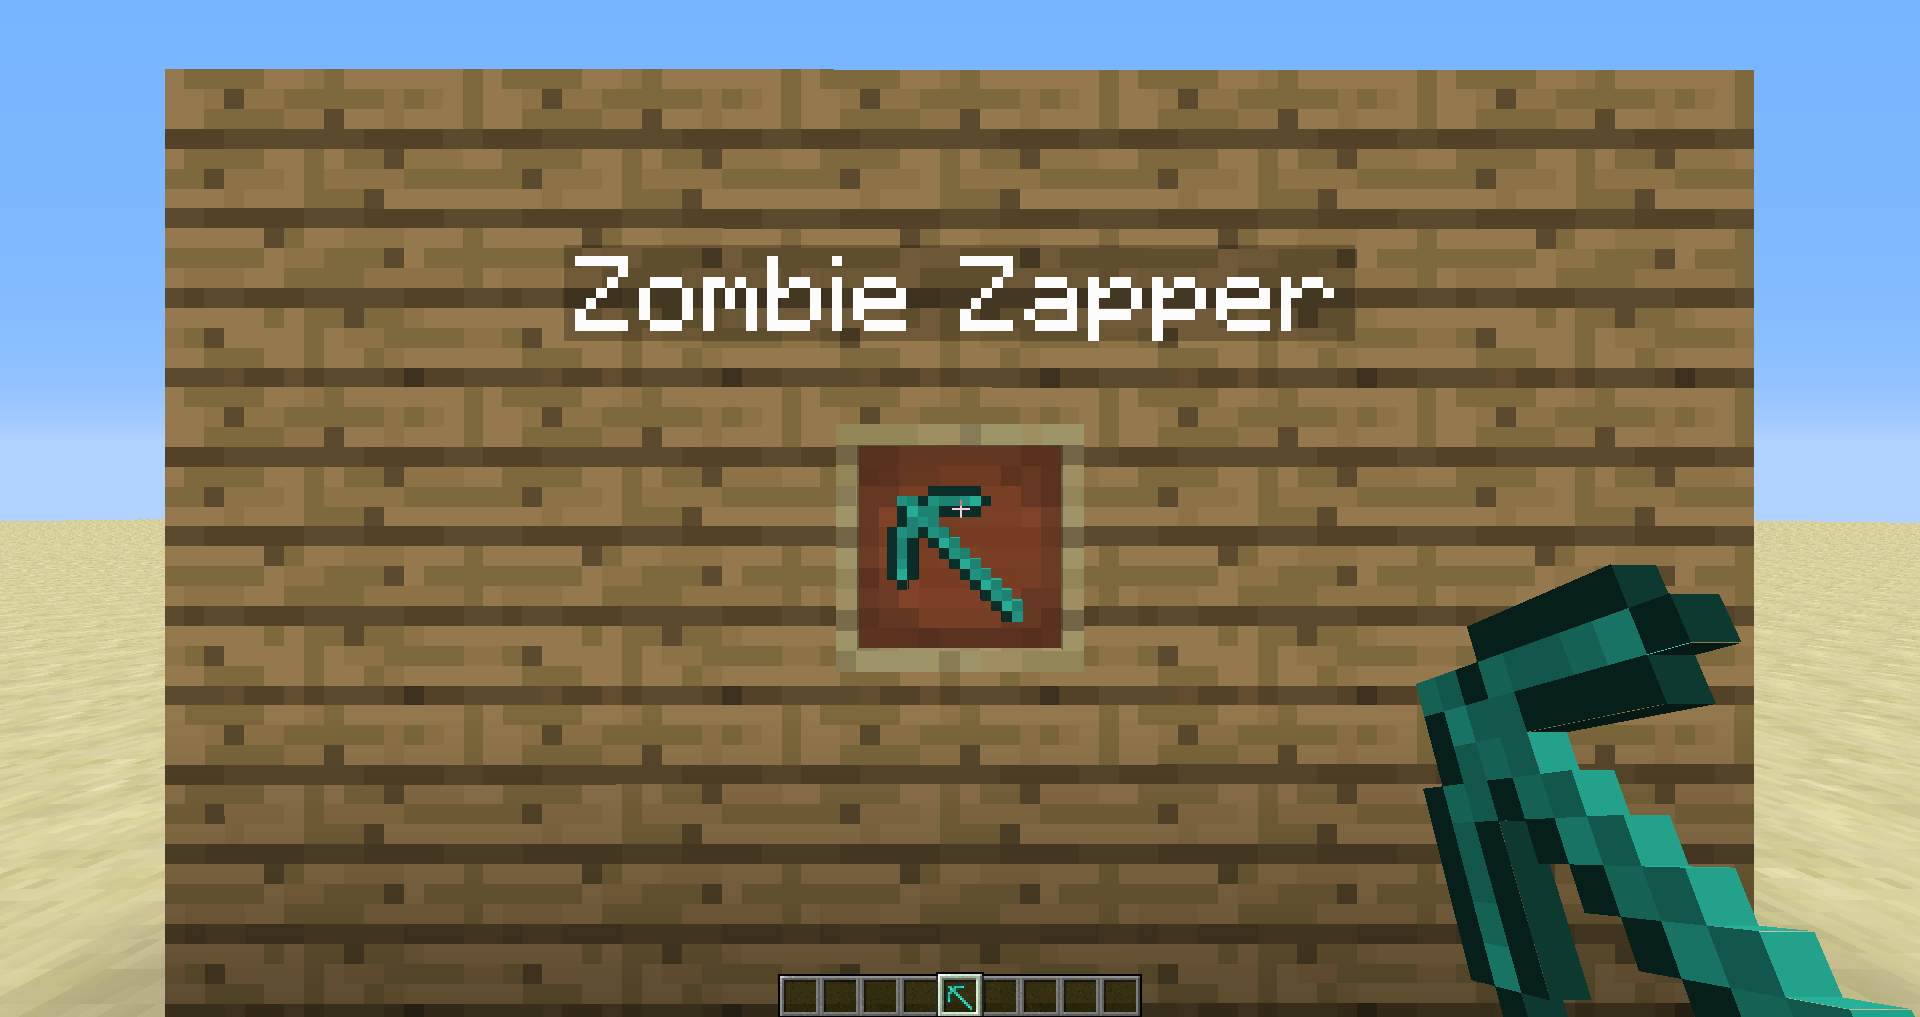 Zombie Zapper